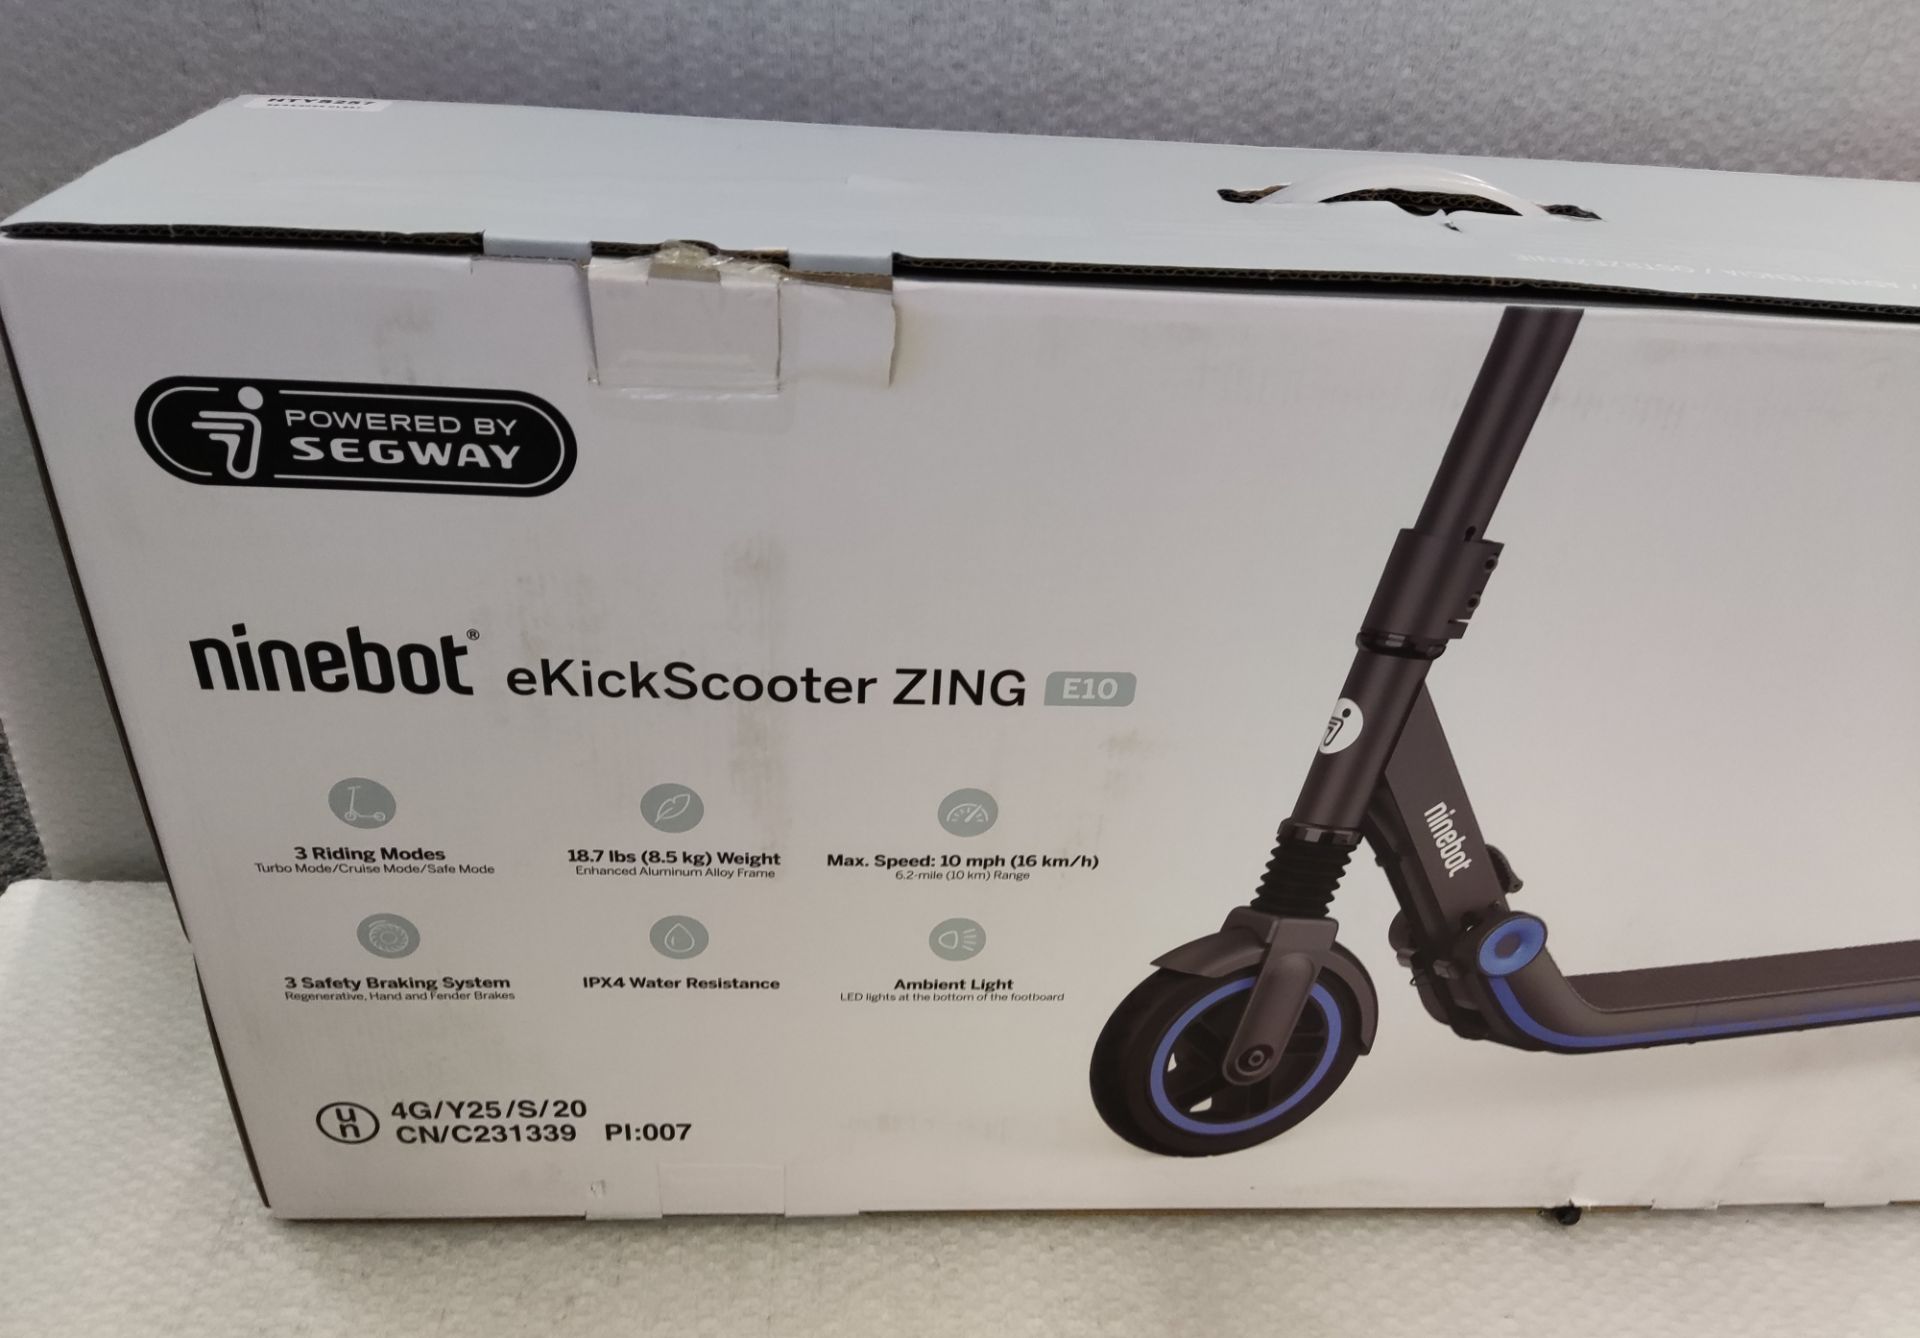 1 x Segway/Ninebot eKickScooter ZING E10 - New/Boxed - Image 3 of 8